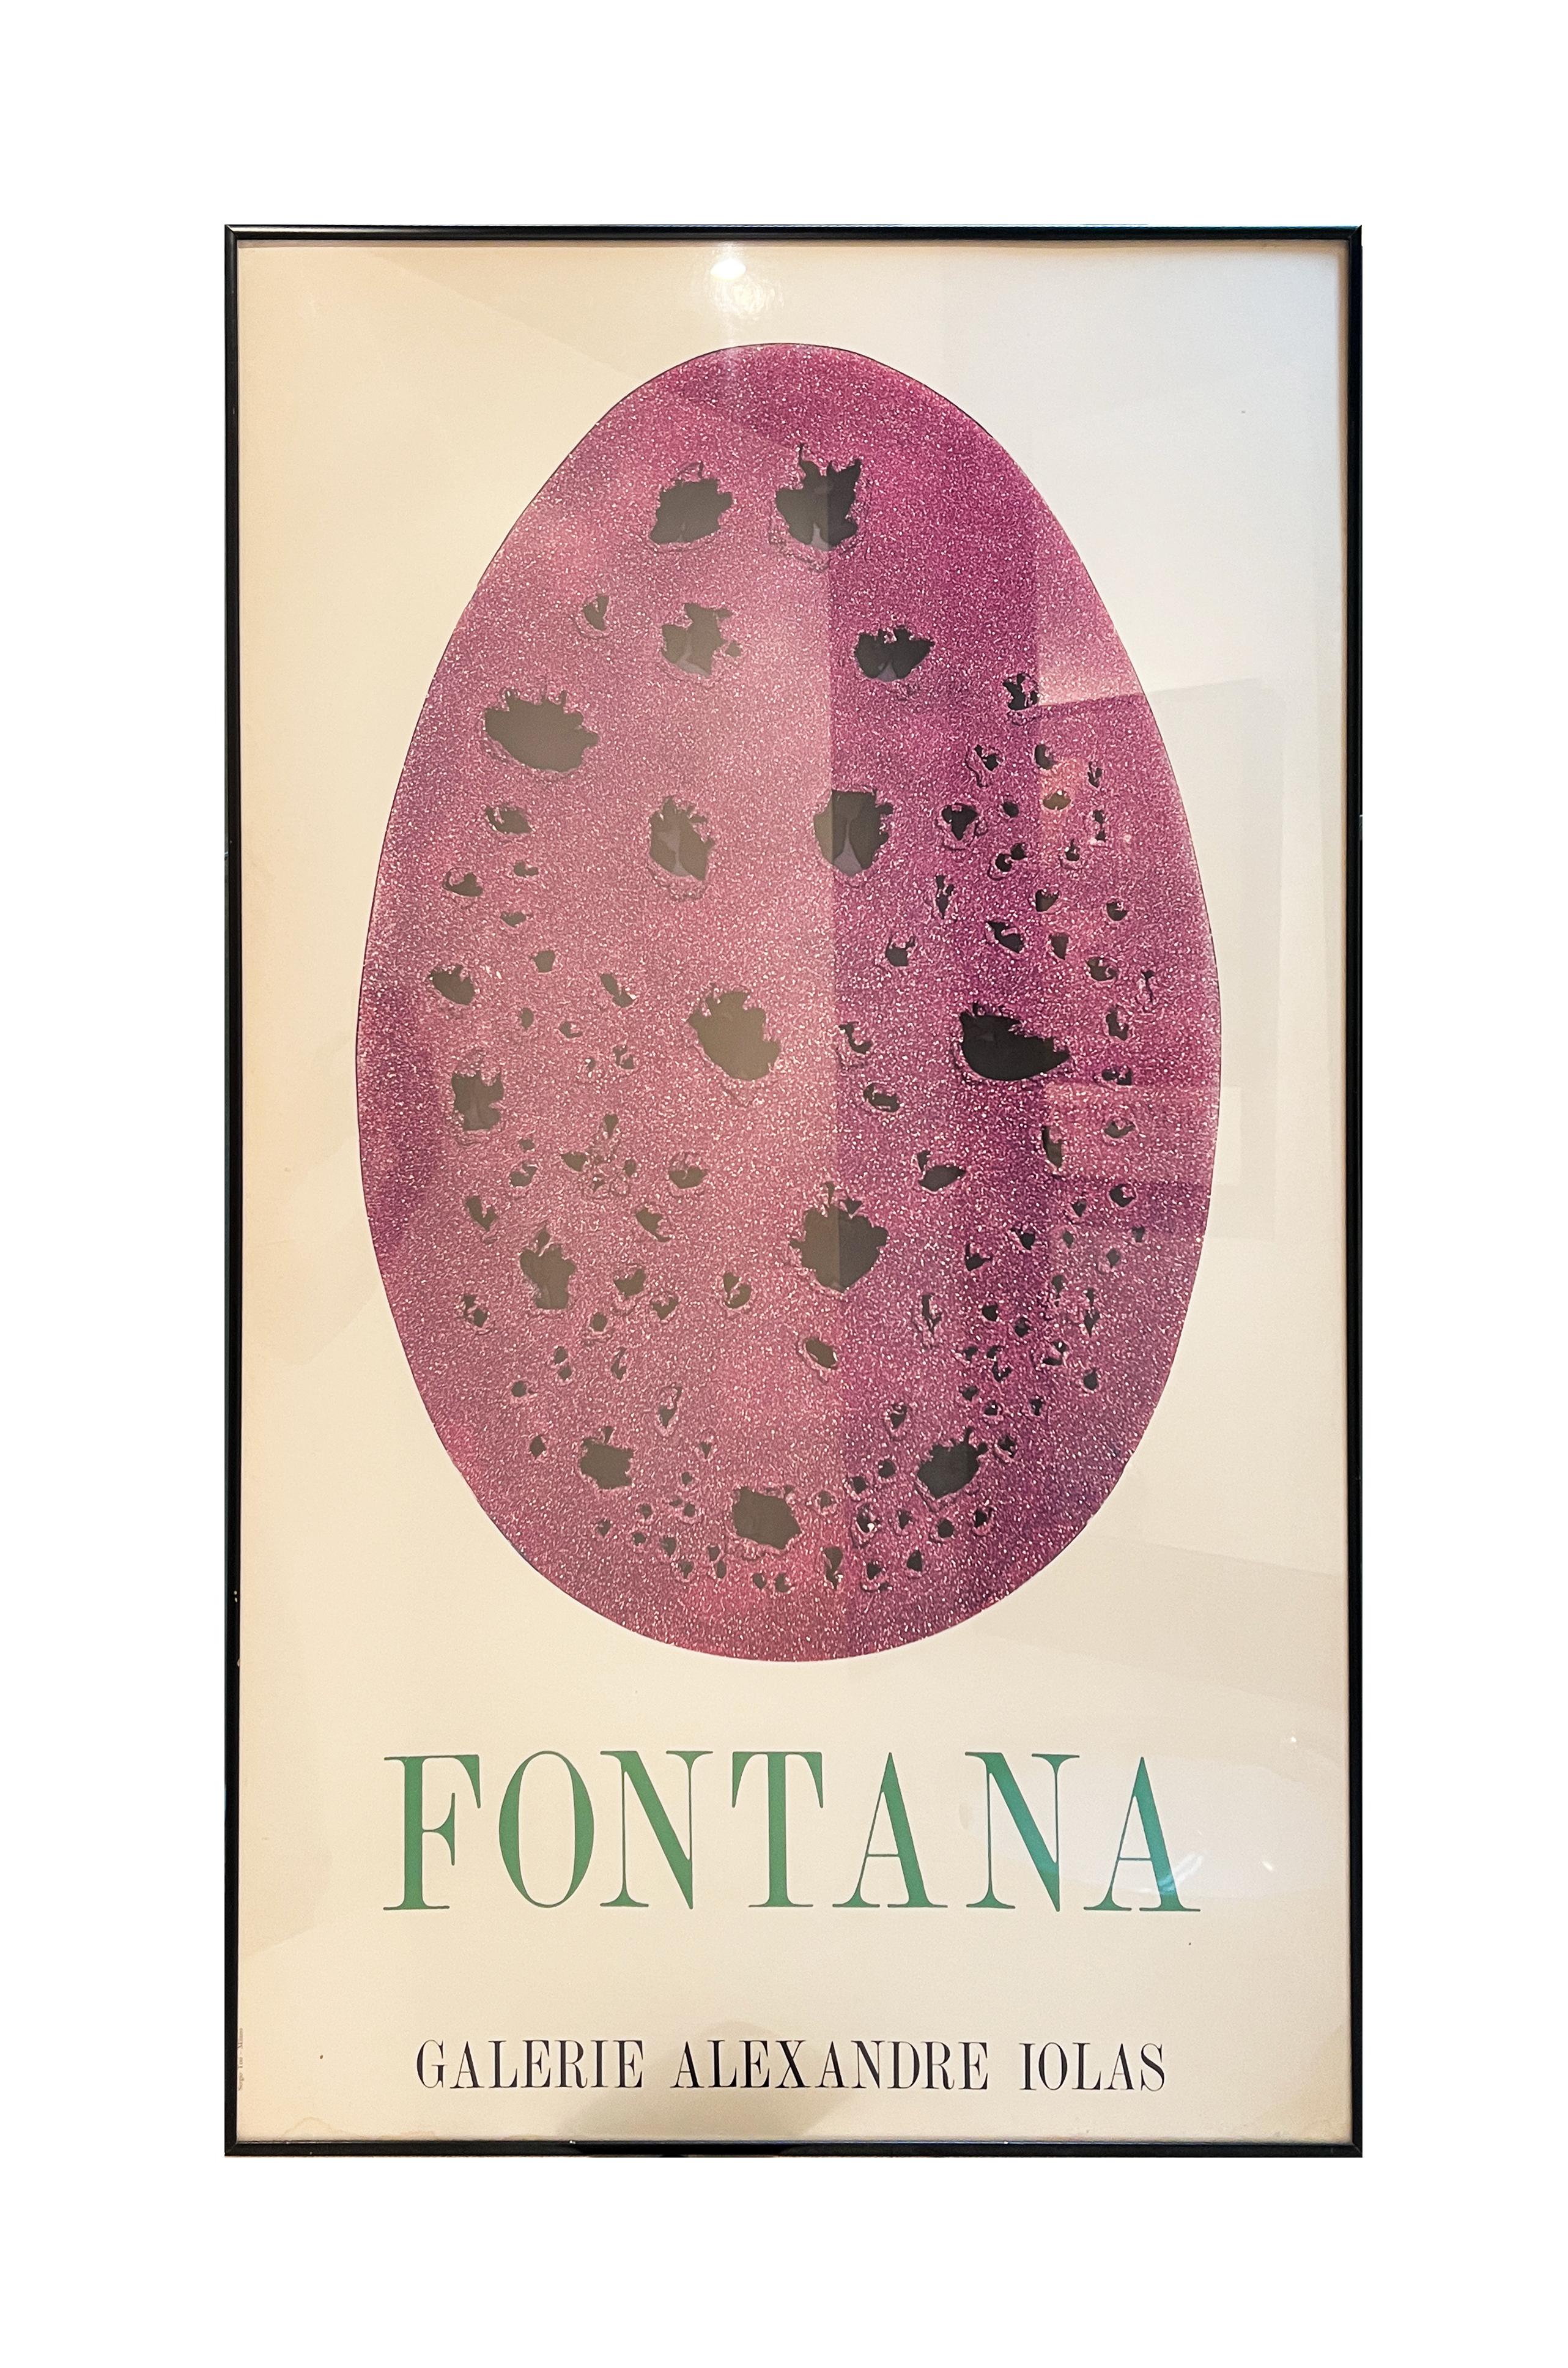 European Fontana Poster, Galerie Alexandre Iolas